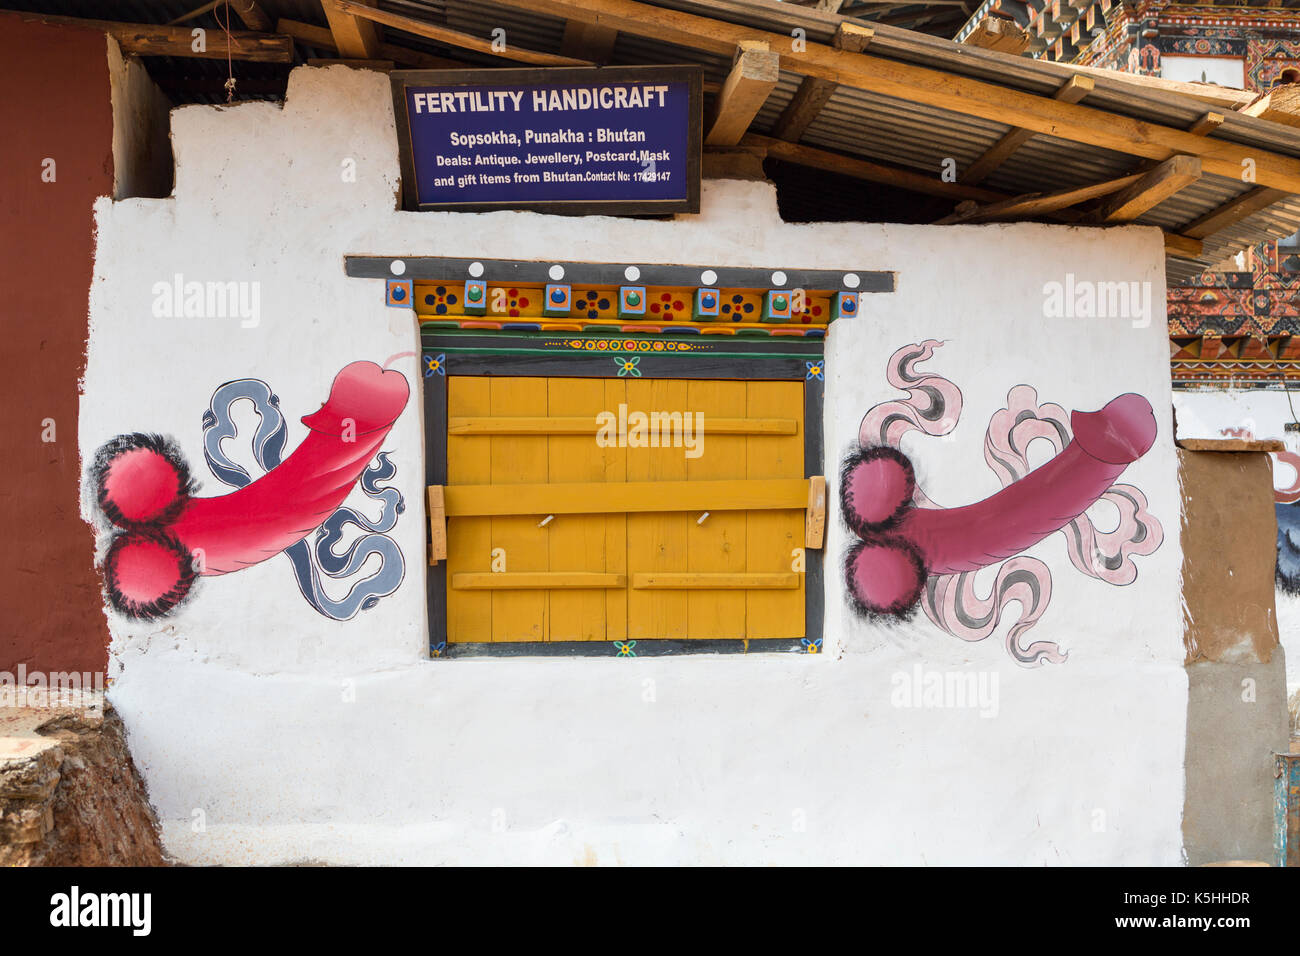 Fertility Handicraft souvenir shop in Lobesa near Punakha, western Bhutan. Stock Photo